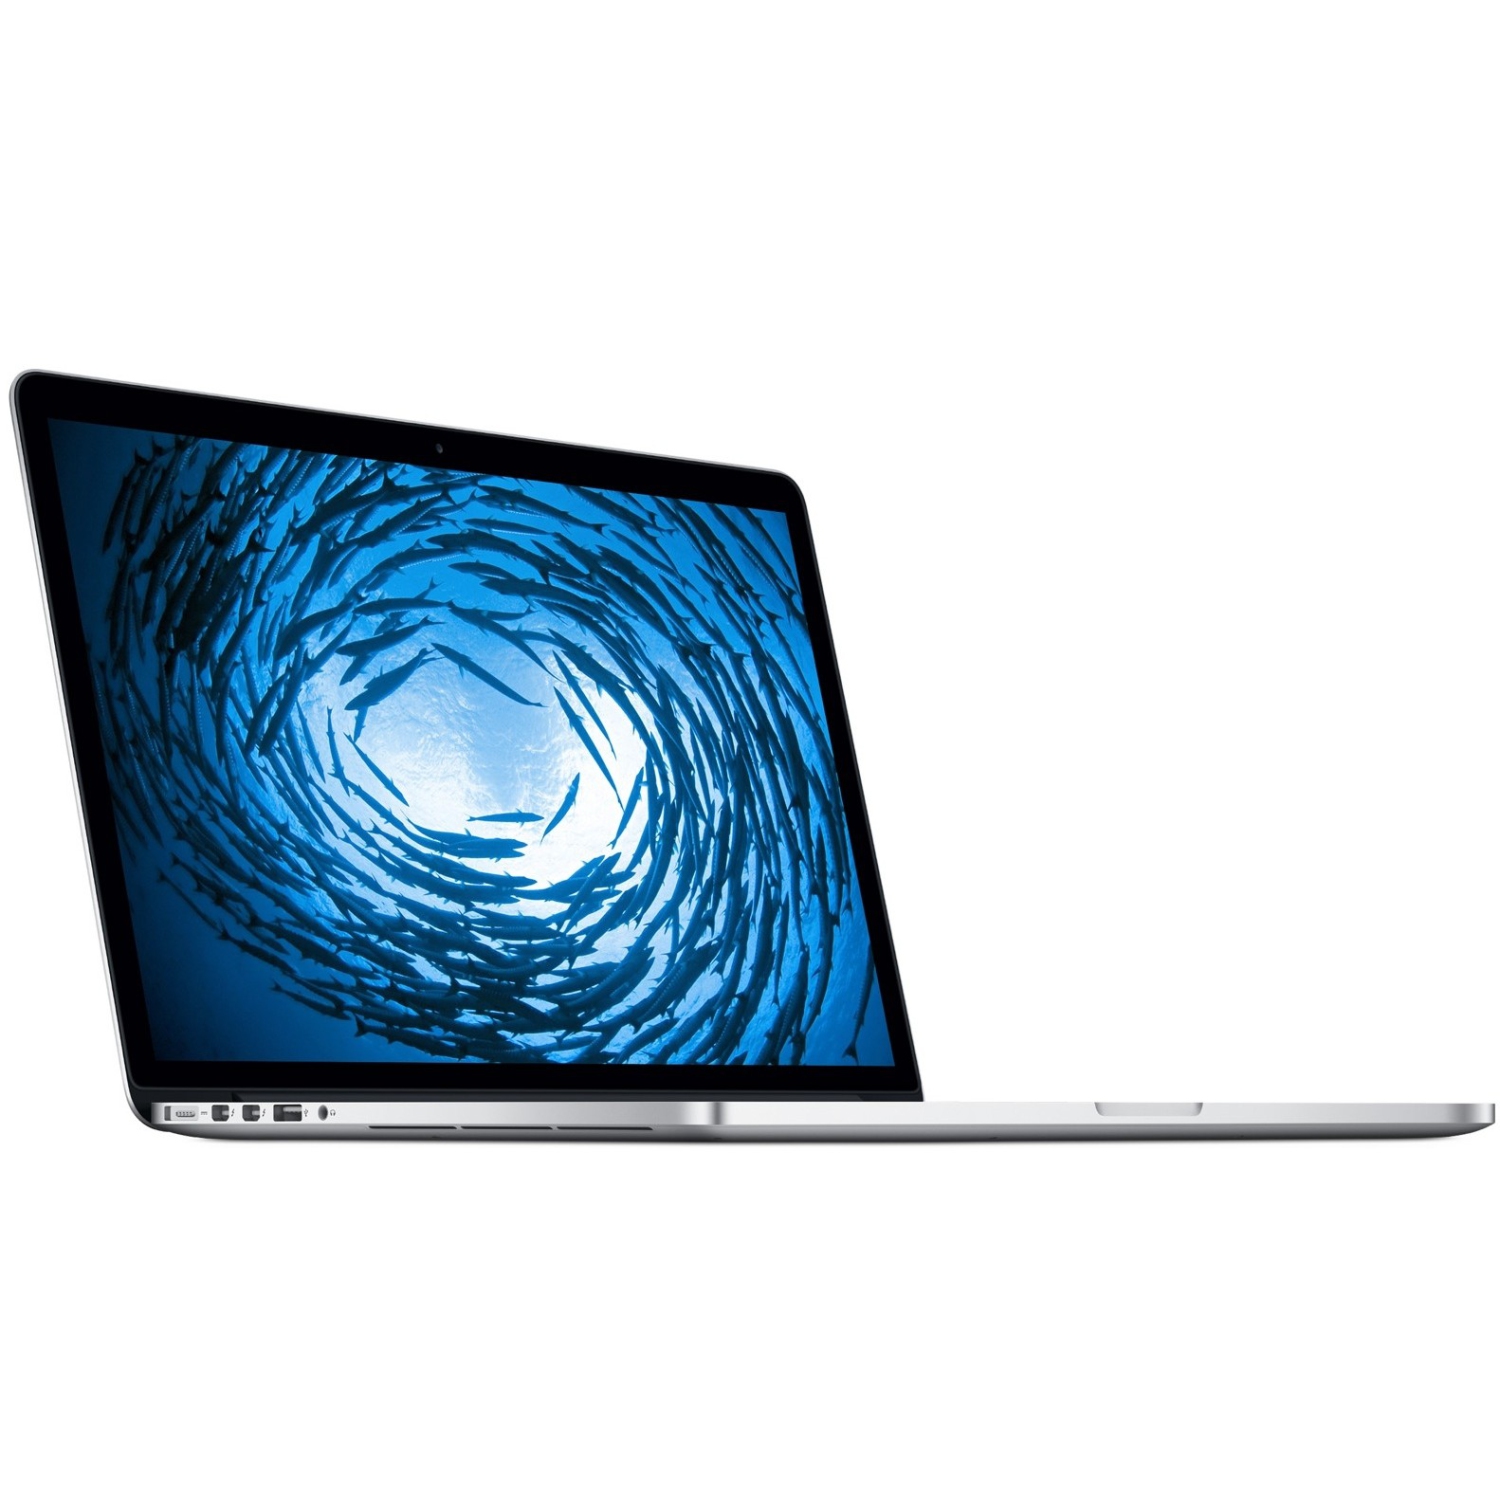 Refurbished (Excellent) - MacBook Pro 15" Retina 2.5GHz i7 16GB / 256GB - 2015 Model! - Grade A, Excellent Condition, 9/10!